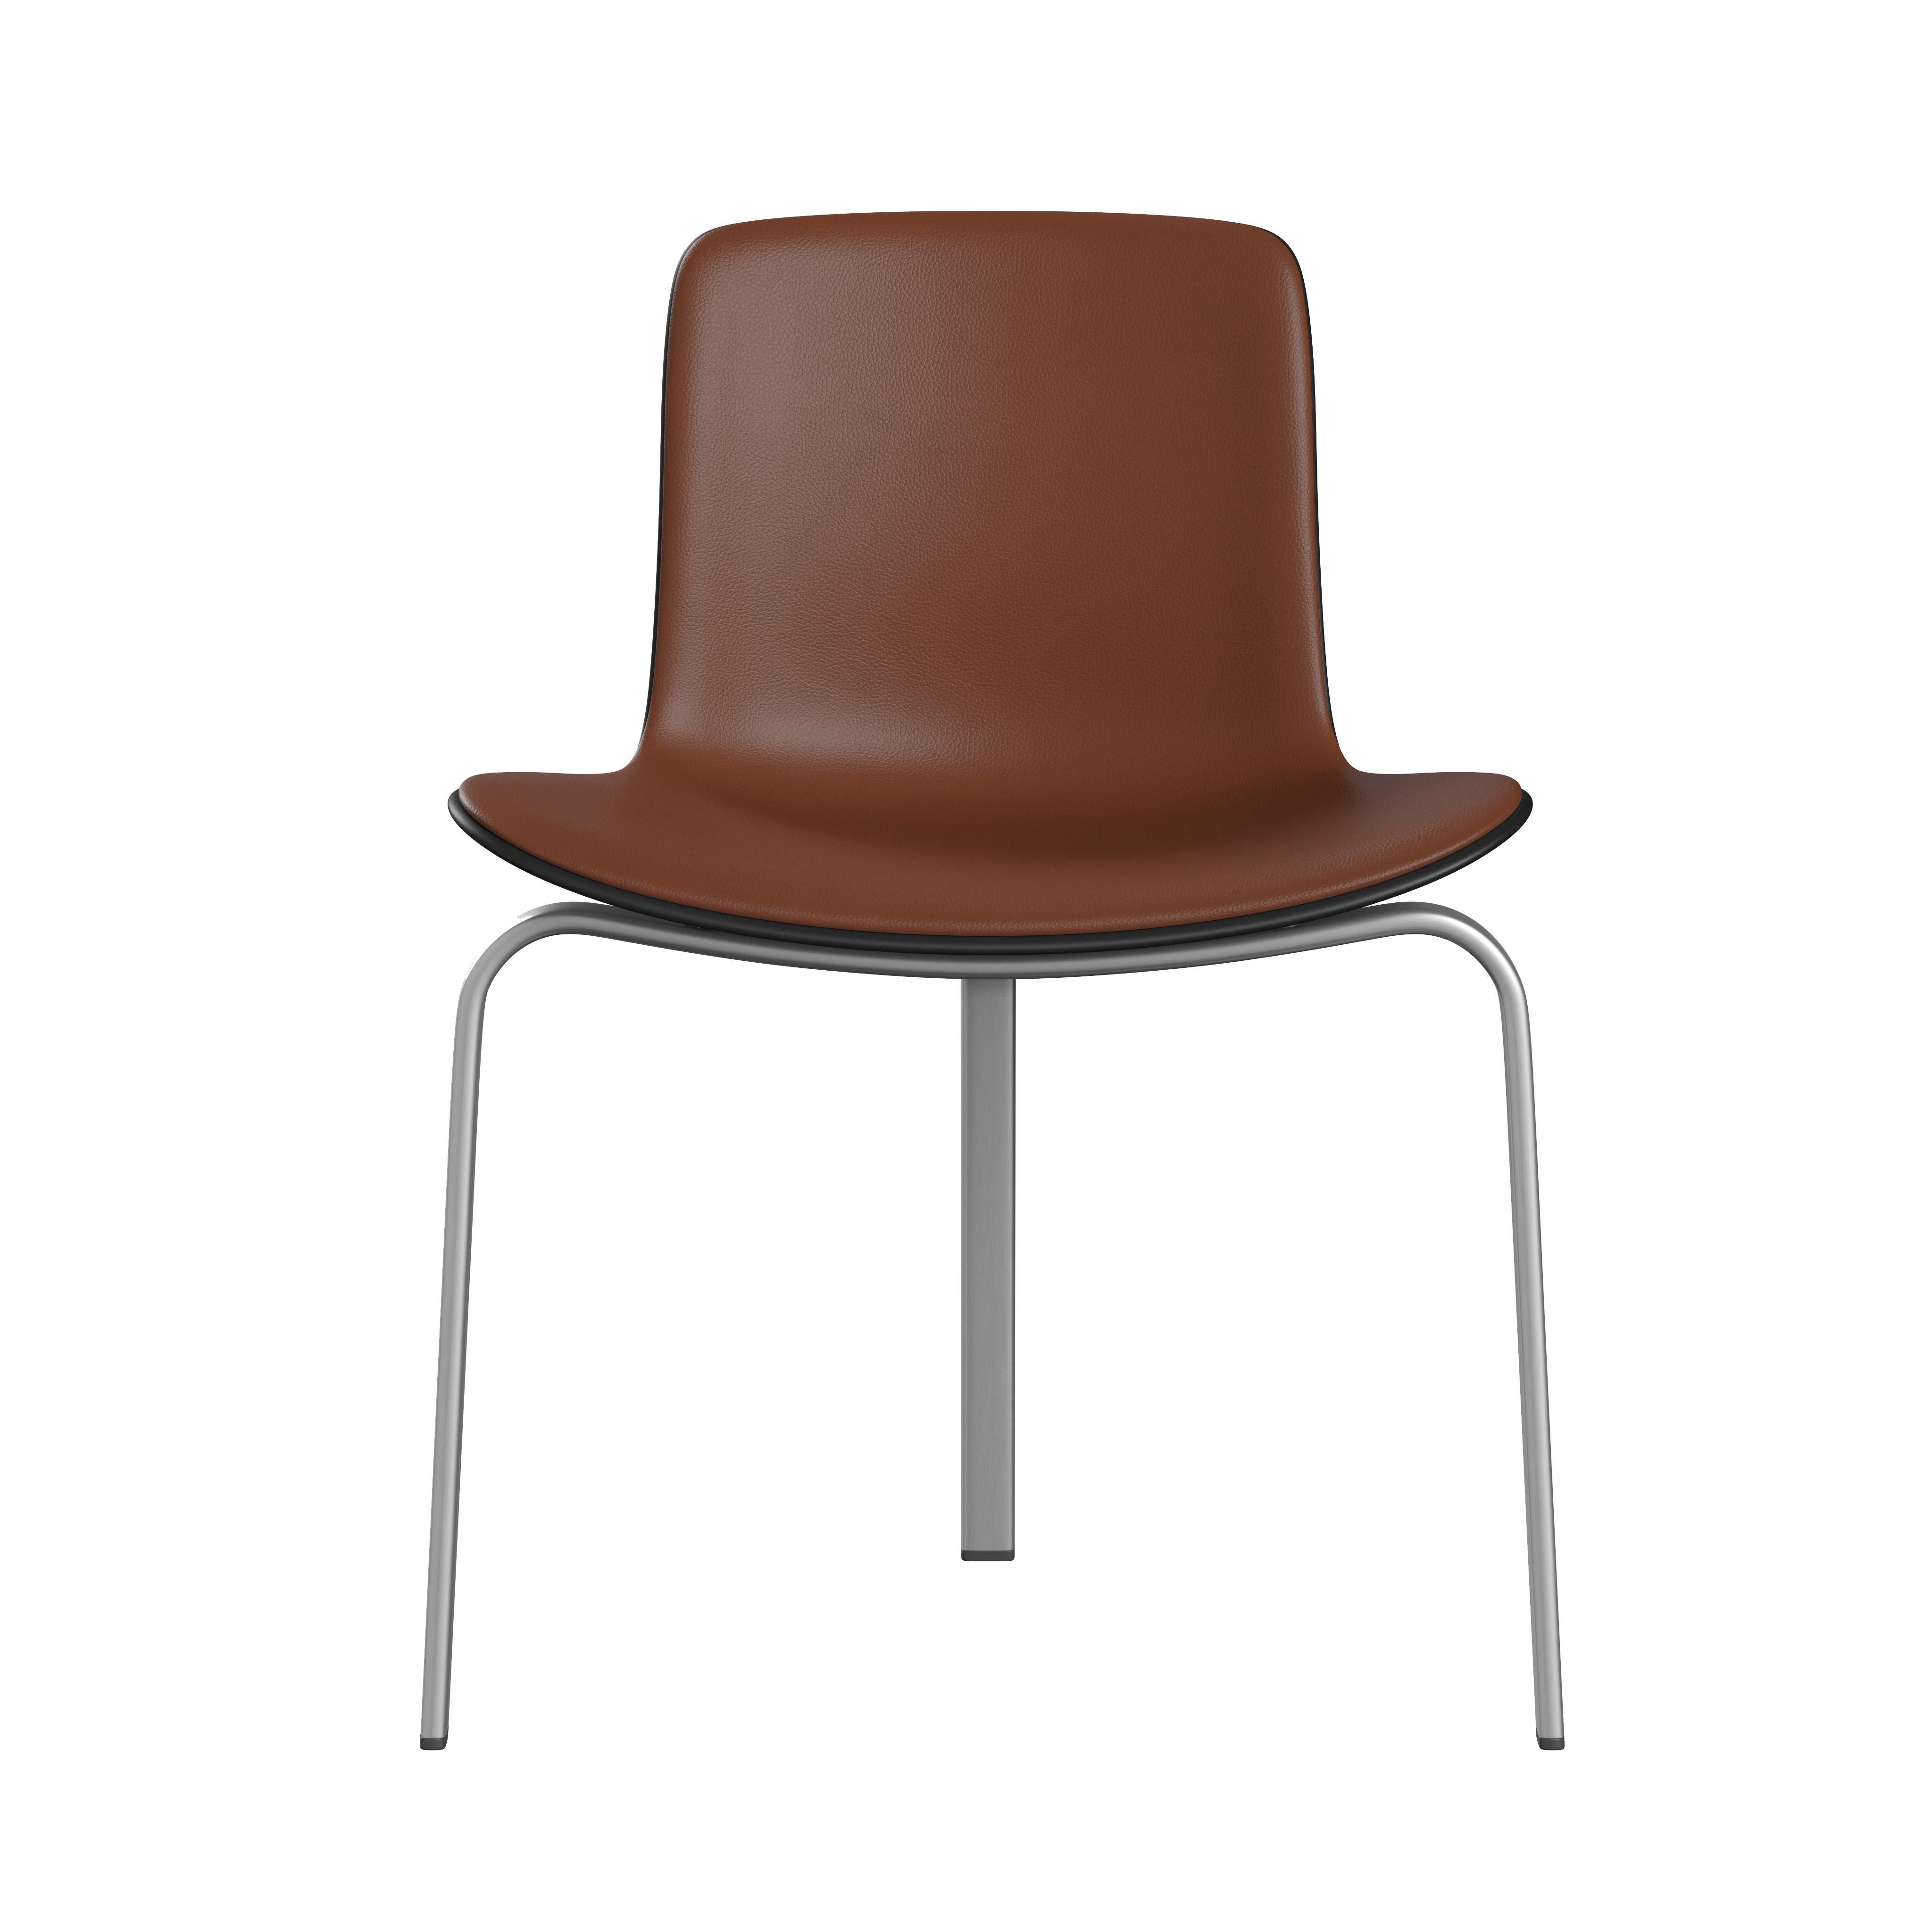 Poul Kjærholm 'PK8' Dining Chair for Fritz Hansen in Aura Leather Upholstery For Sale 2